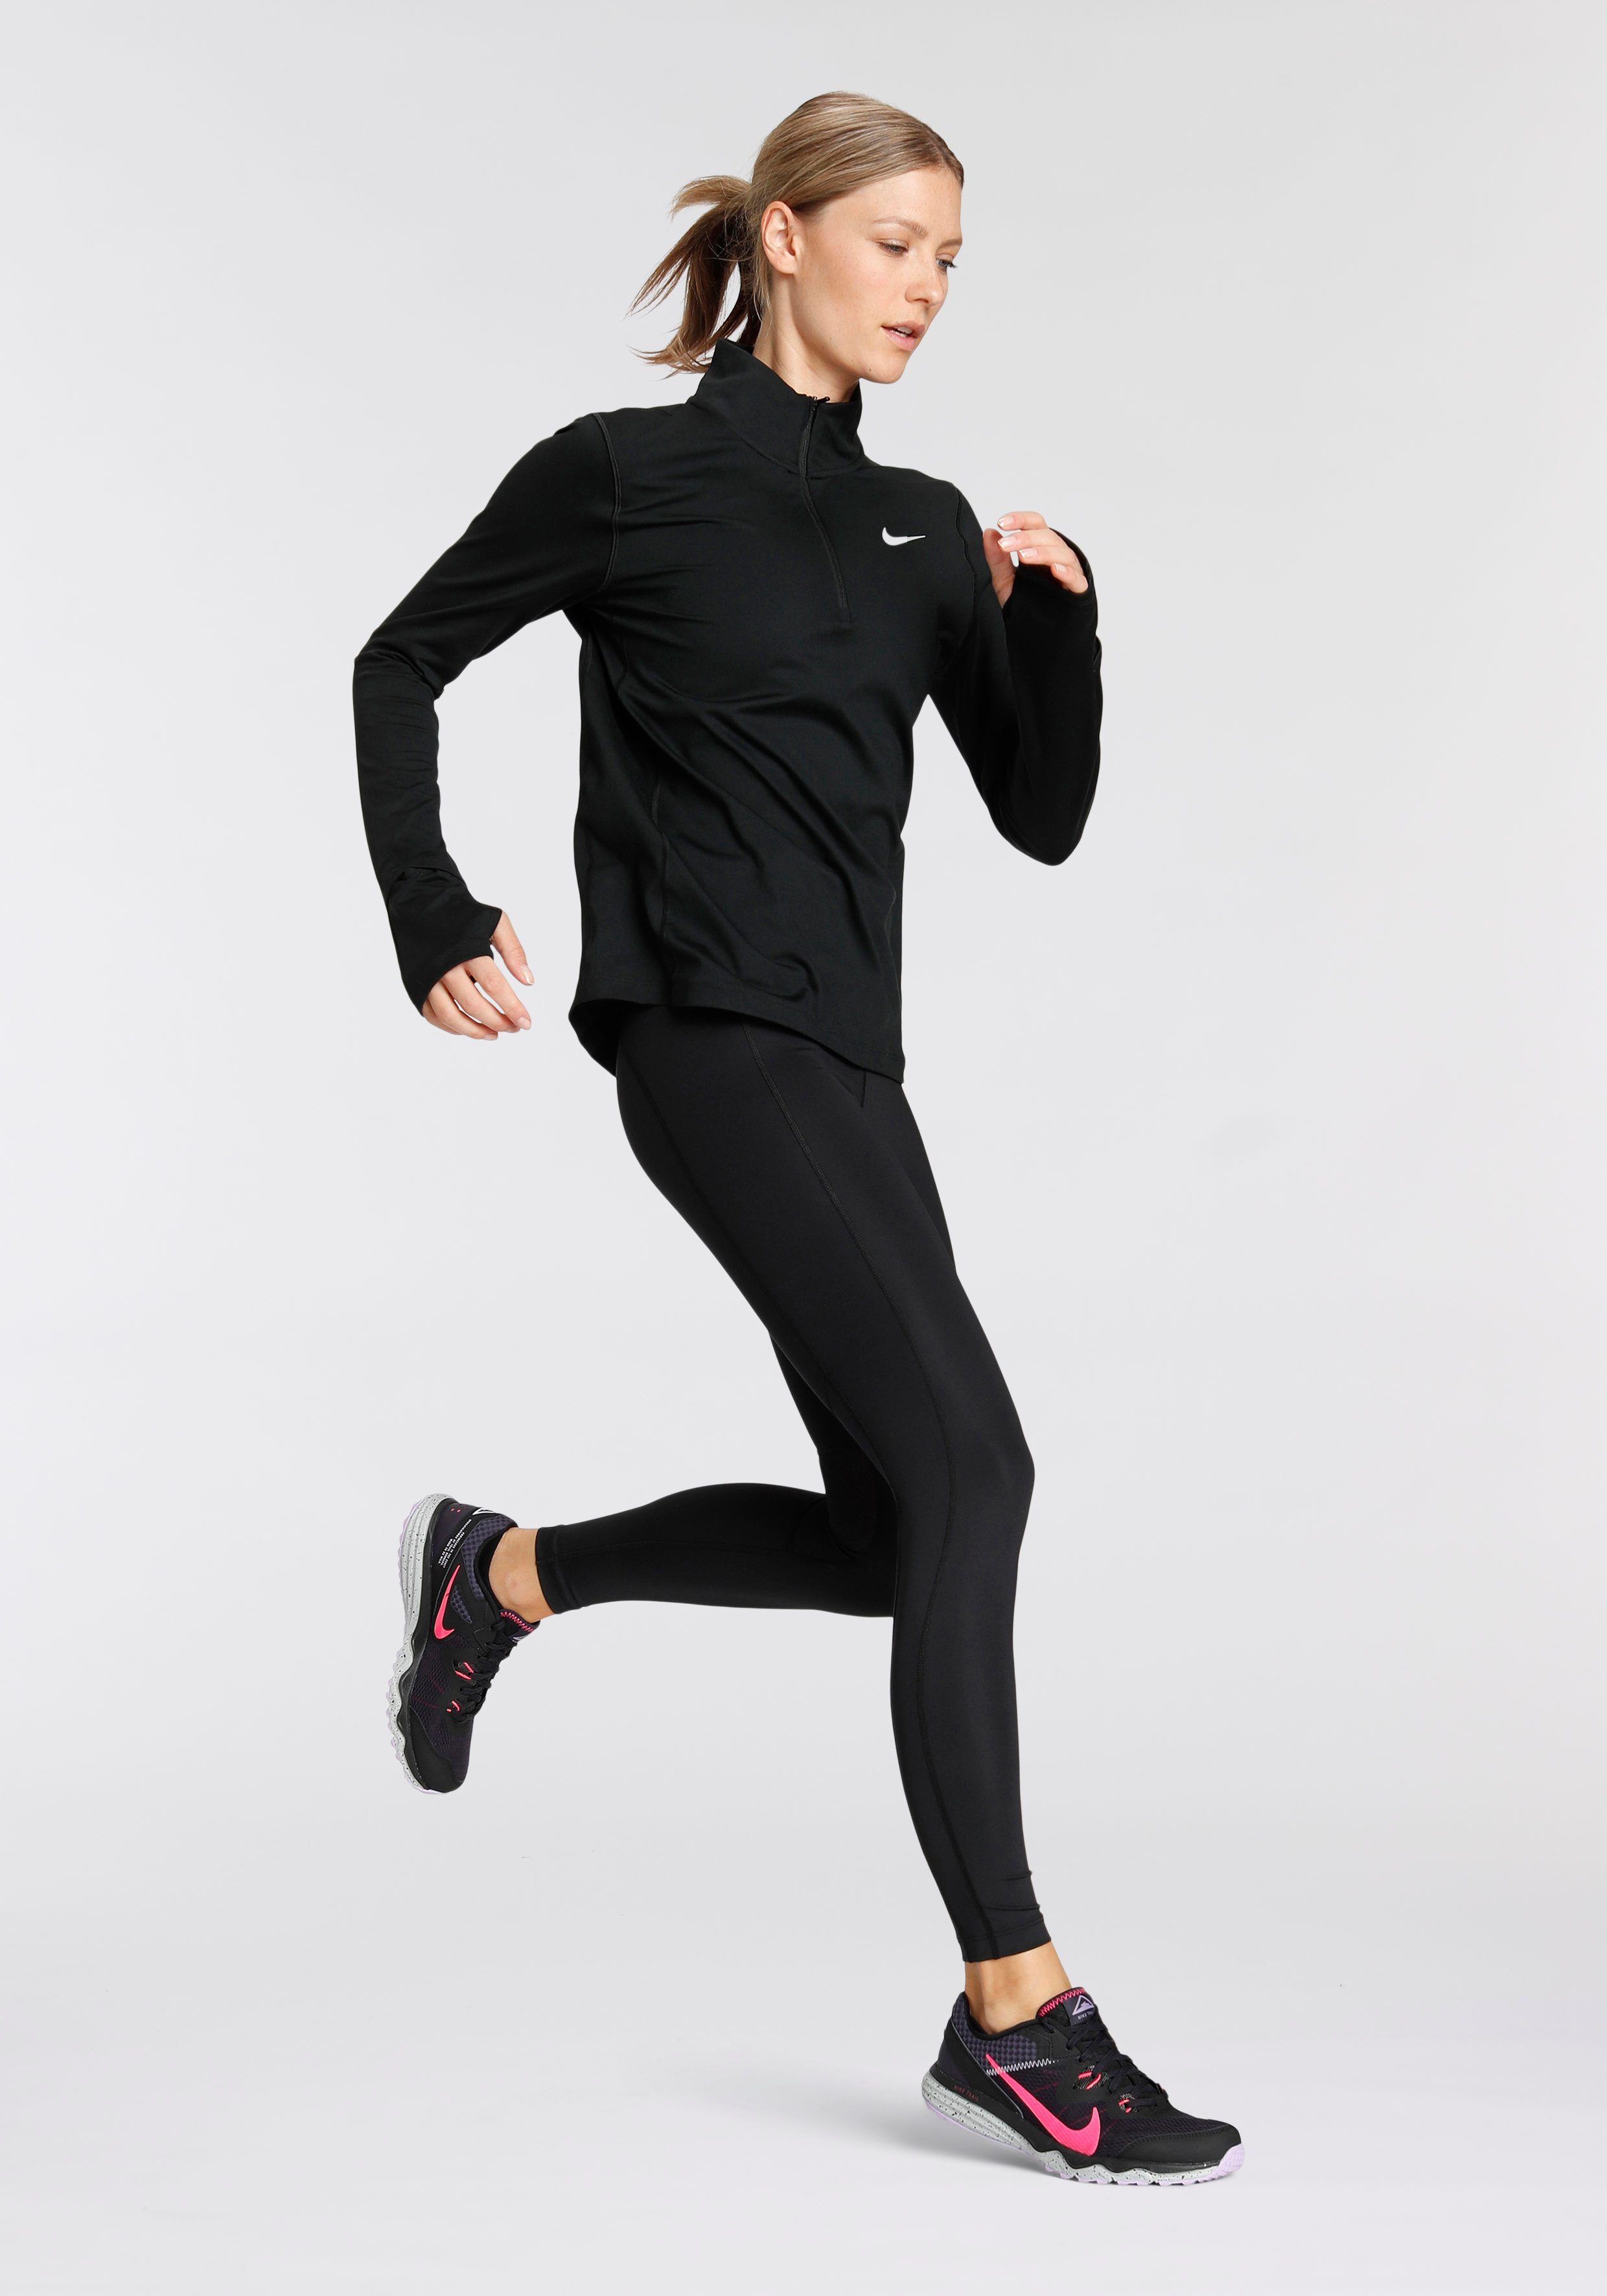 Nike Lauftights EPIC FAST schwarz RUNNING LEGGINGS MID-RISE WOMEN'S POCKET